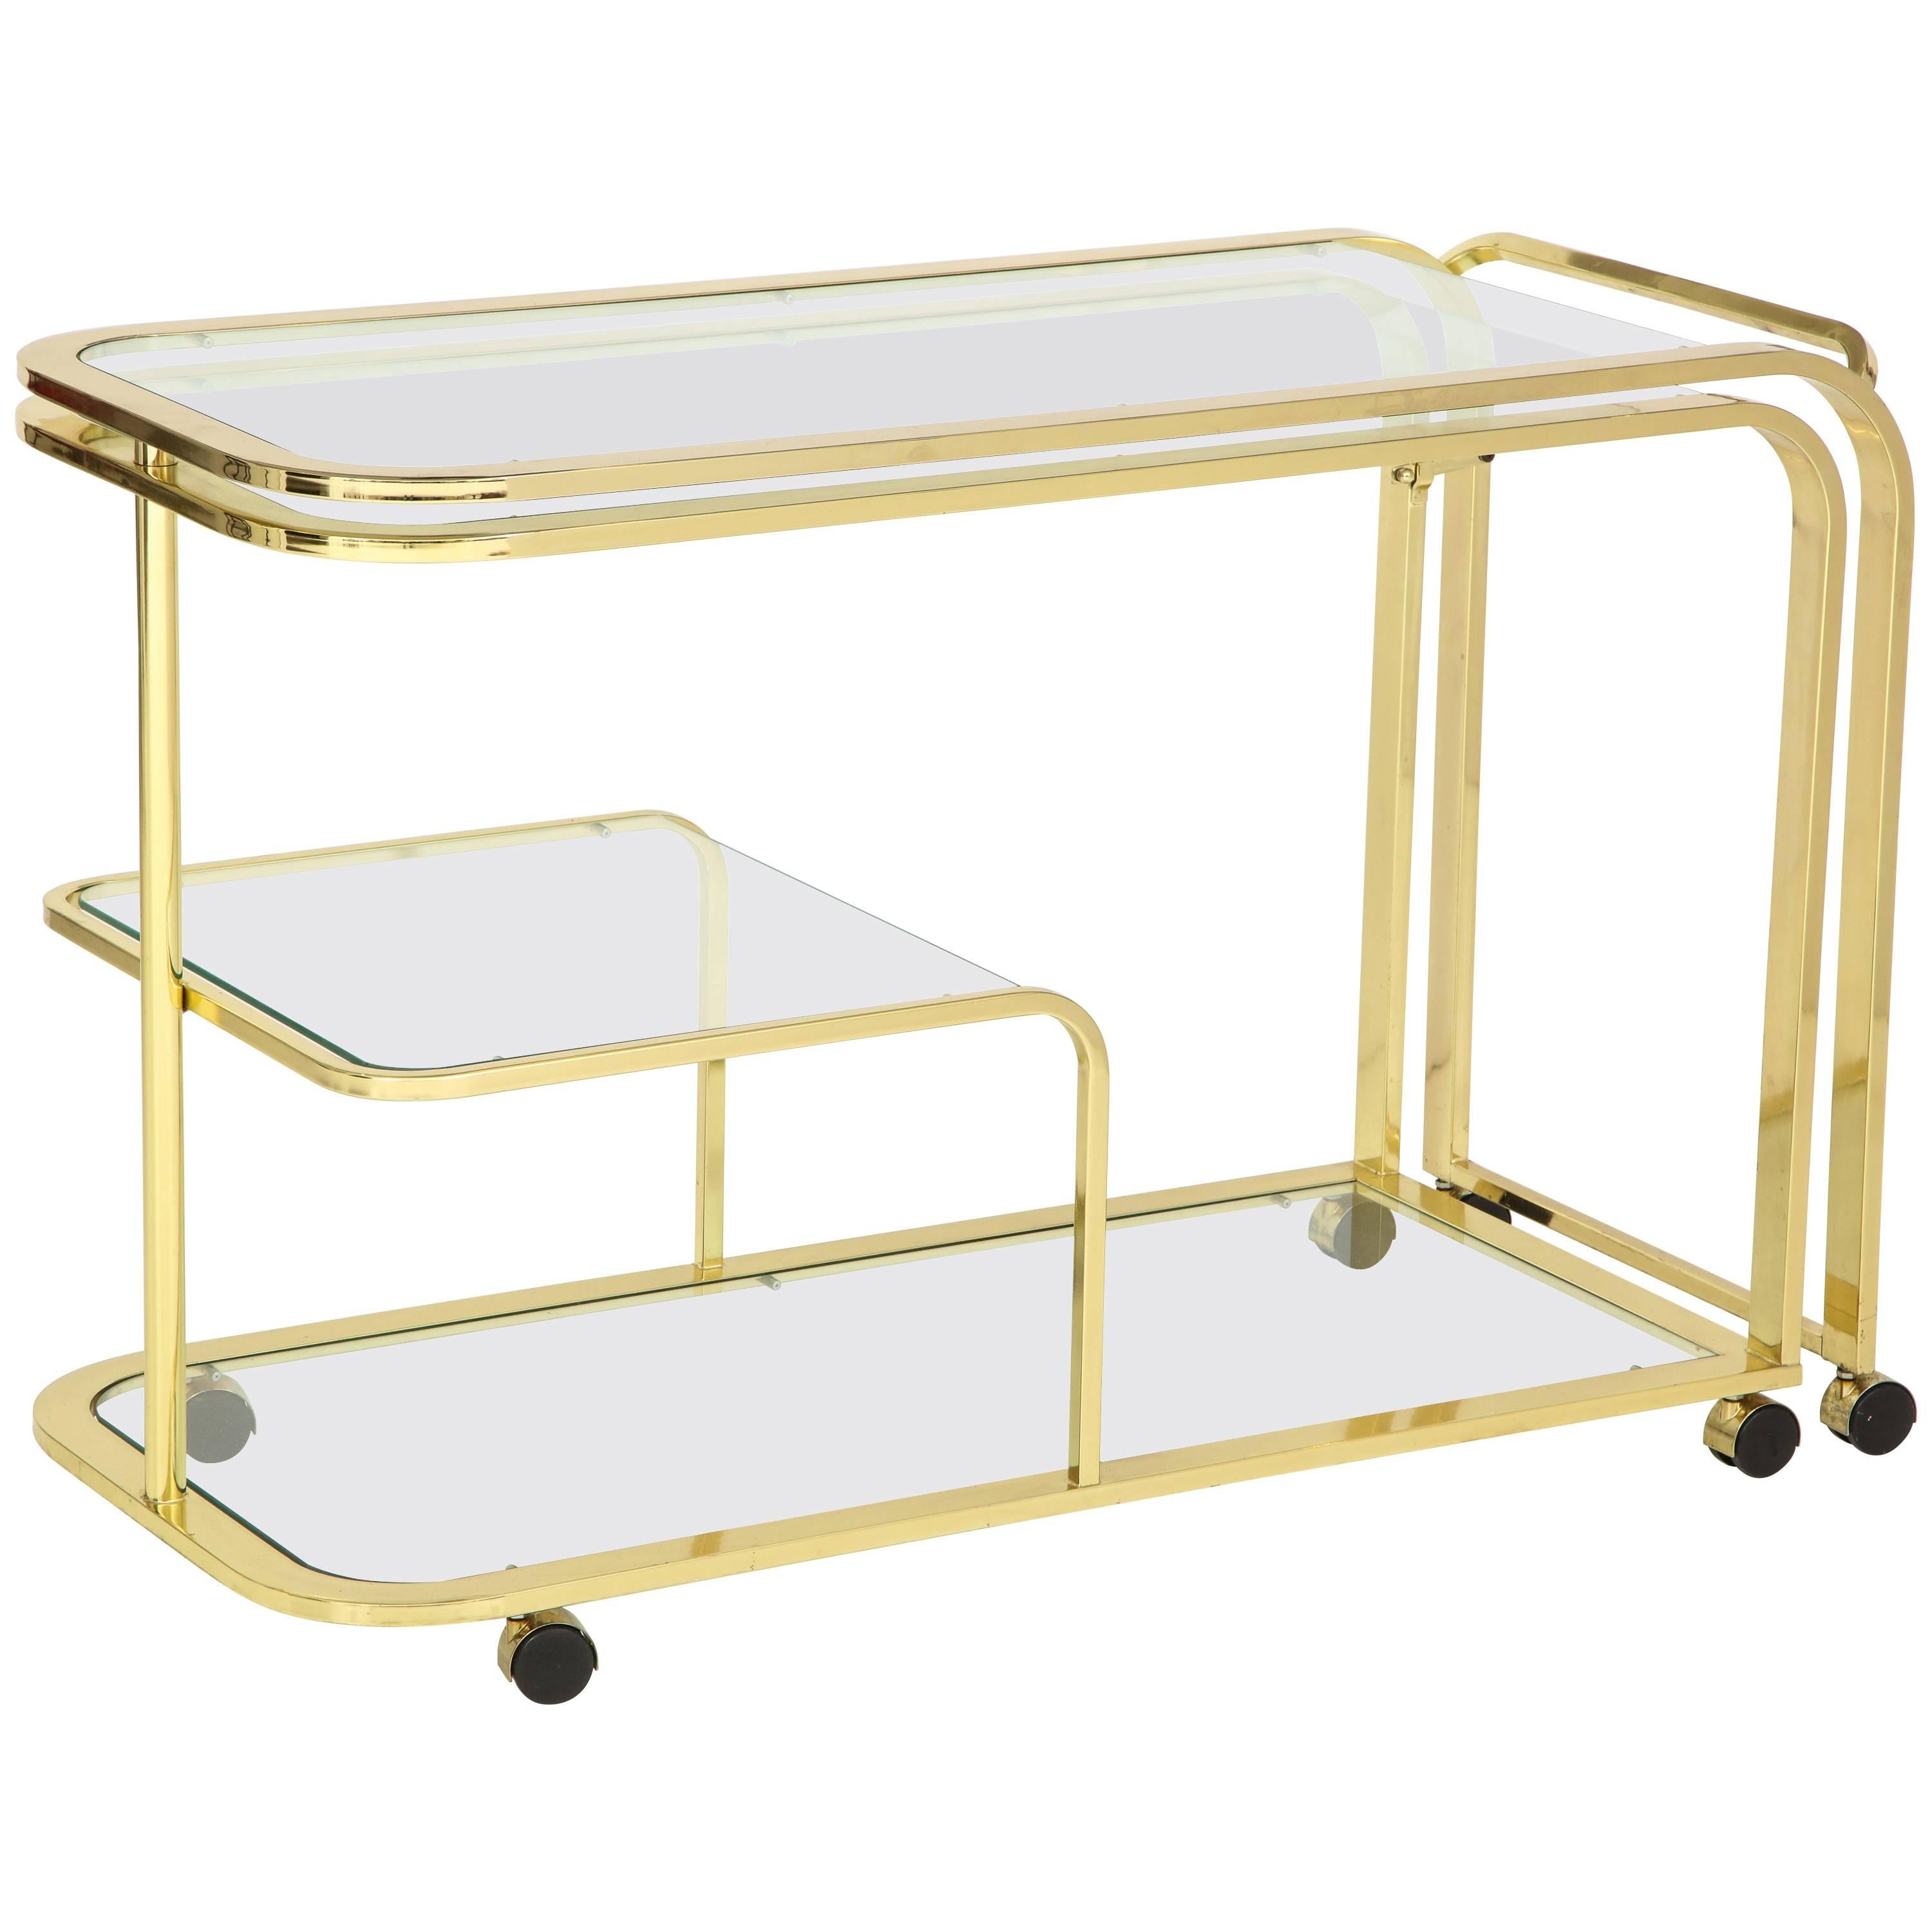  Design Institute of America Milo Baughman Style Expanding Bar/ Serving Cart